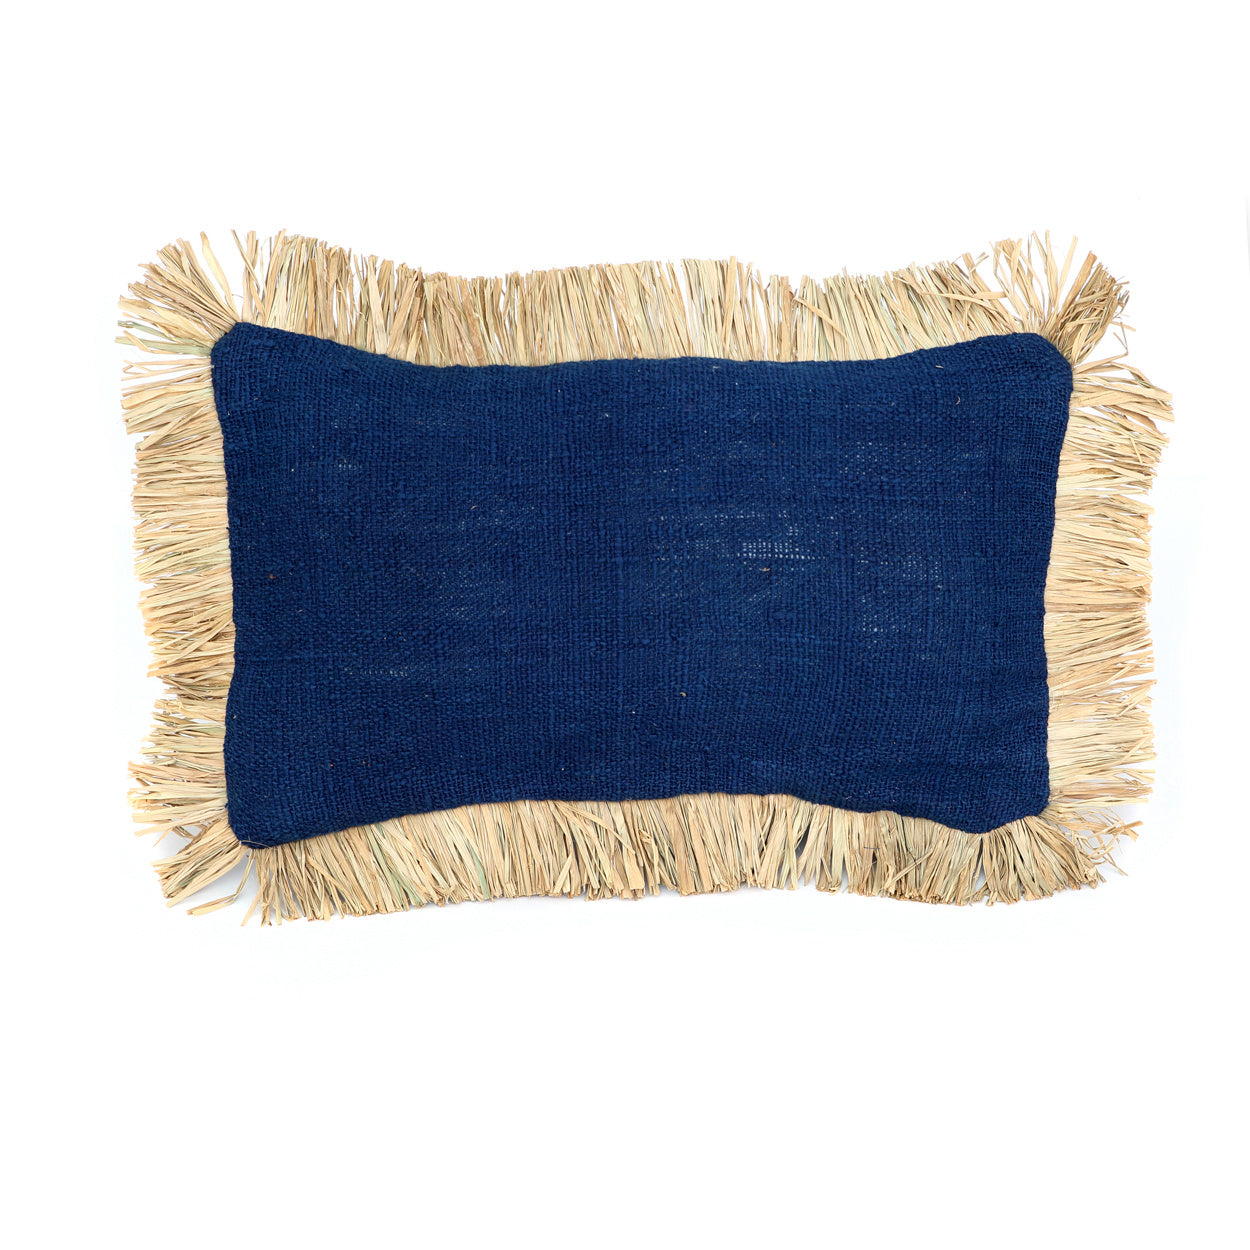 THE SAINT TROPEZ Cushion Cover Natural-Blue 30x50 front view